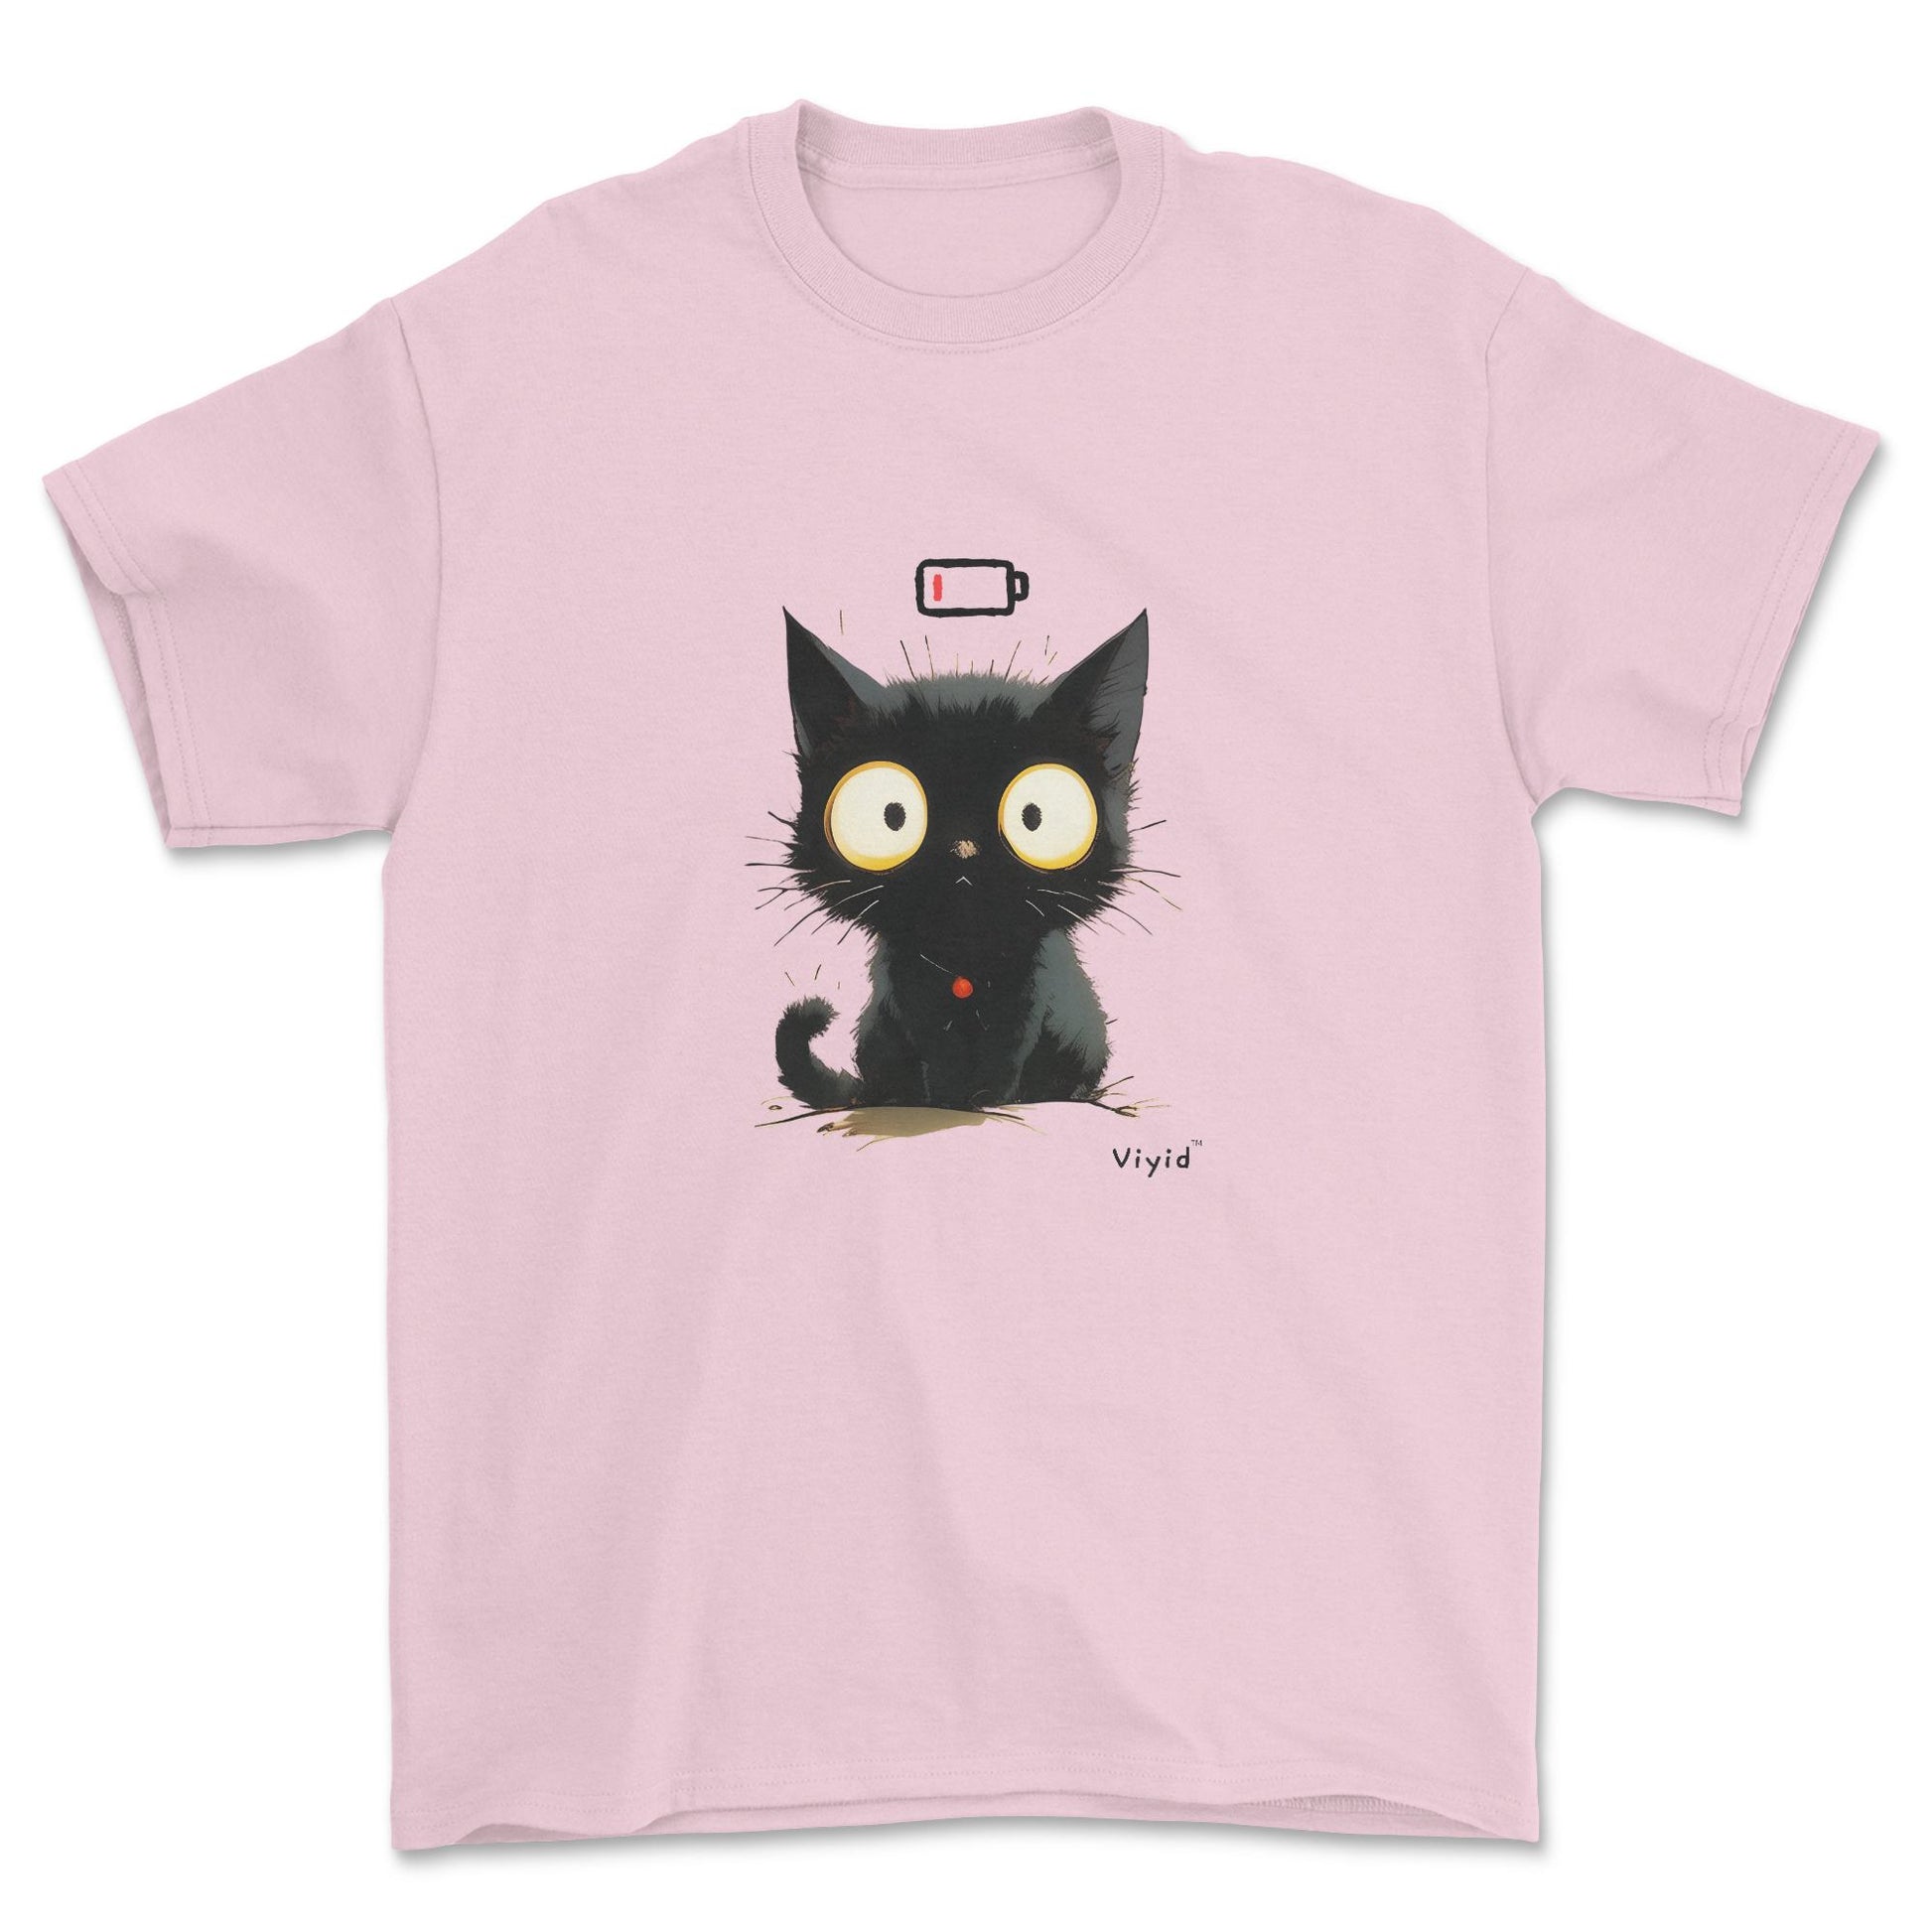 Low battery black cat adult t-shirt light pink